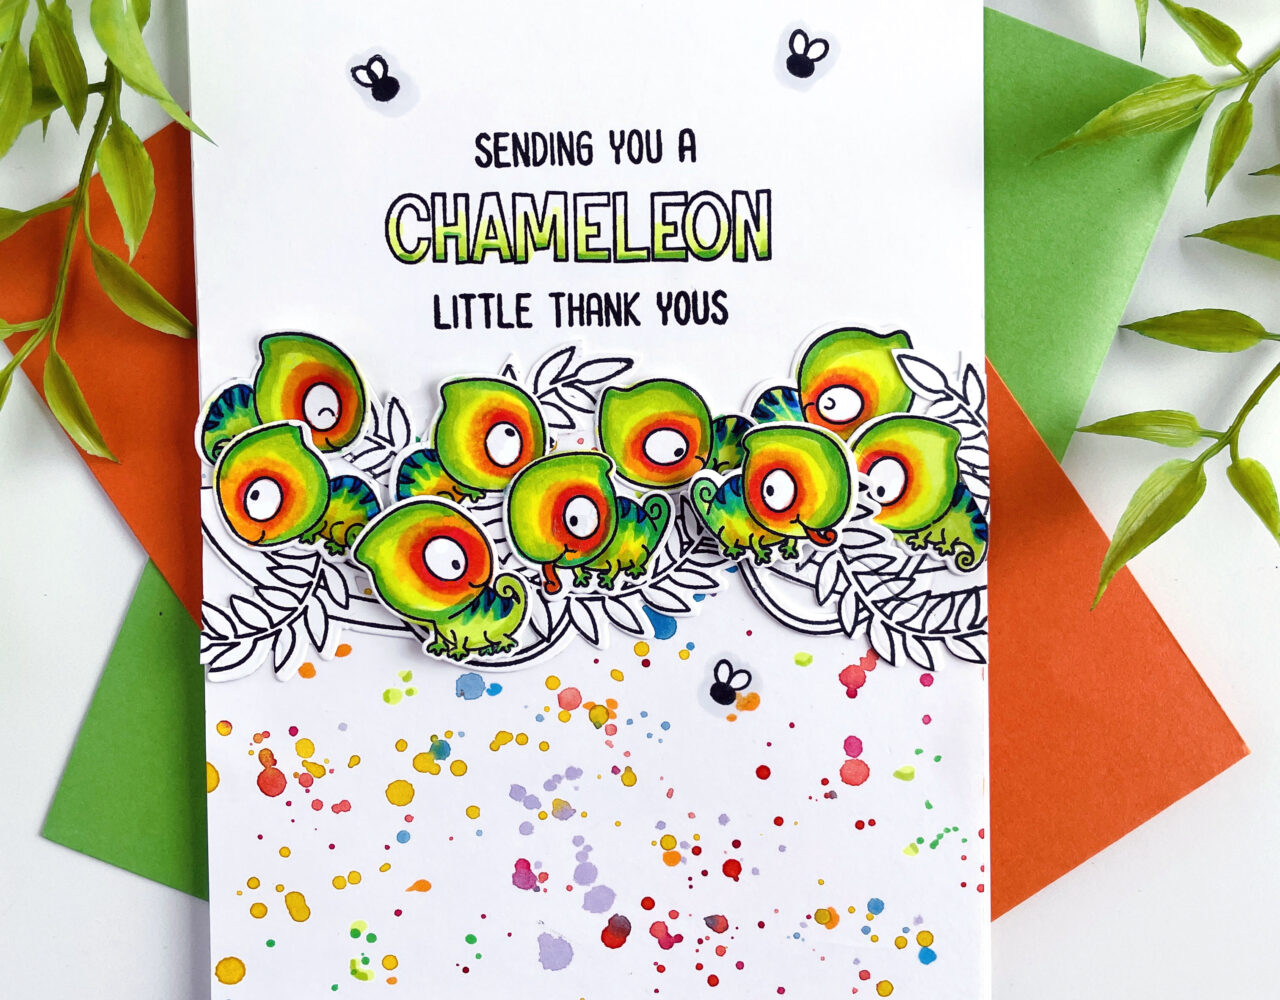 A Chameleon Little Thank Yous!